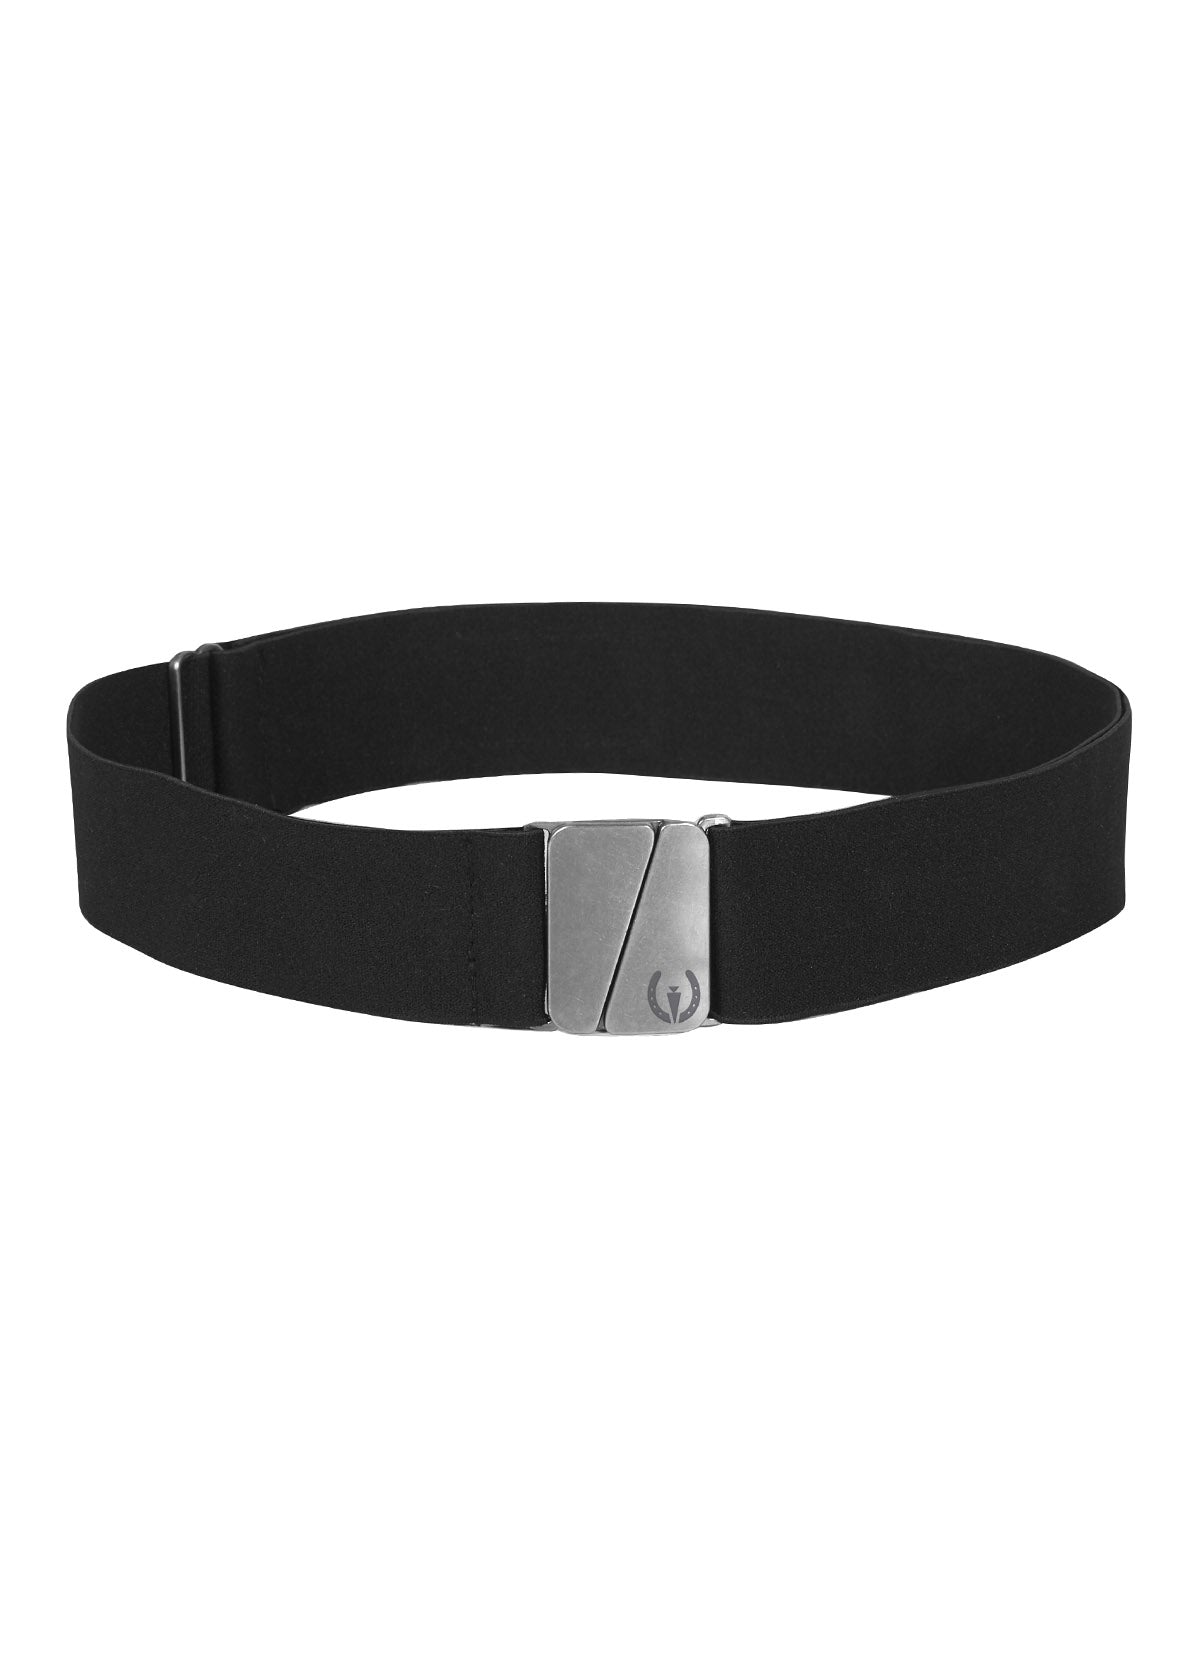 Black Elastic Belt (4 inches wide)